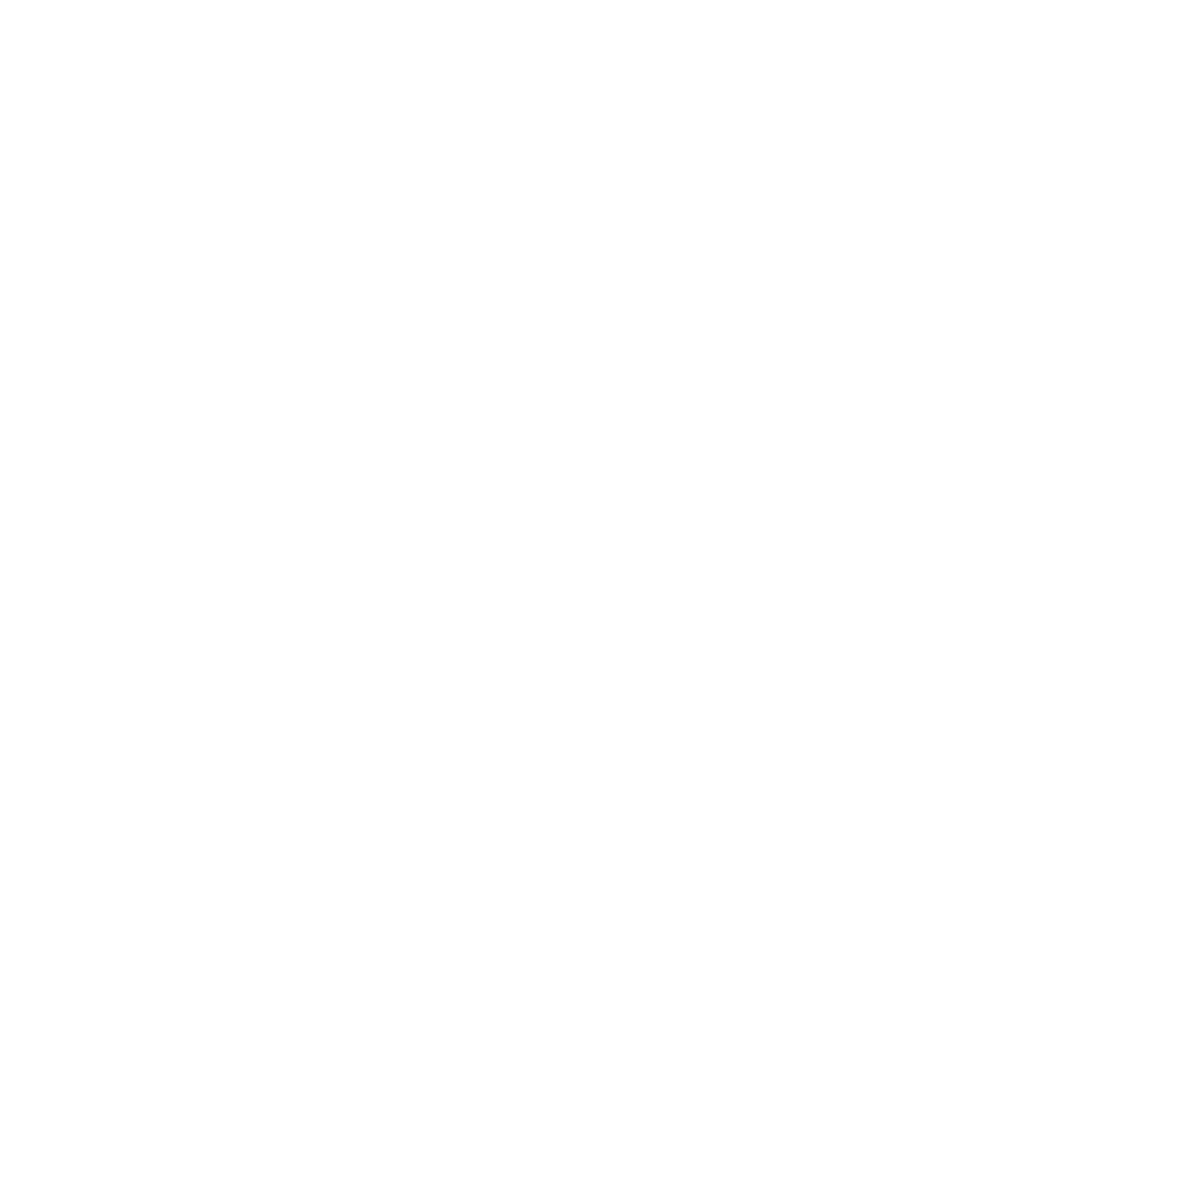 GenZHome